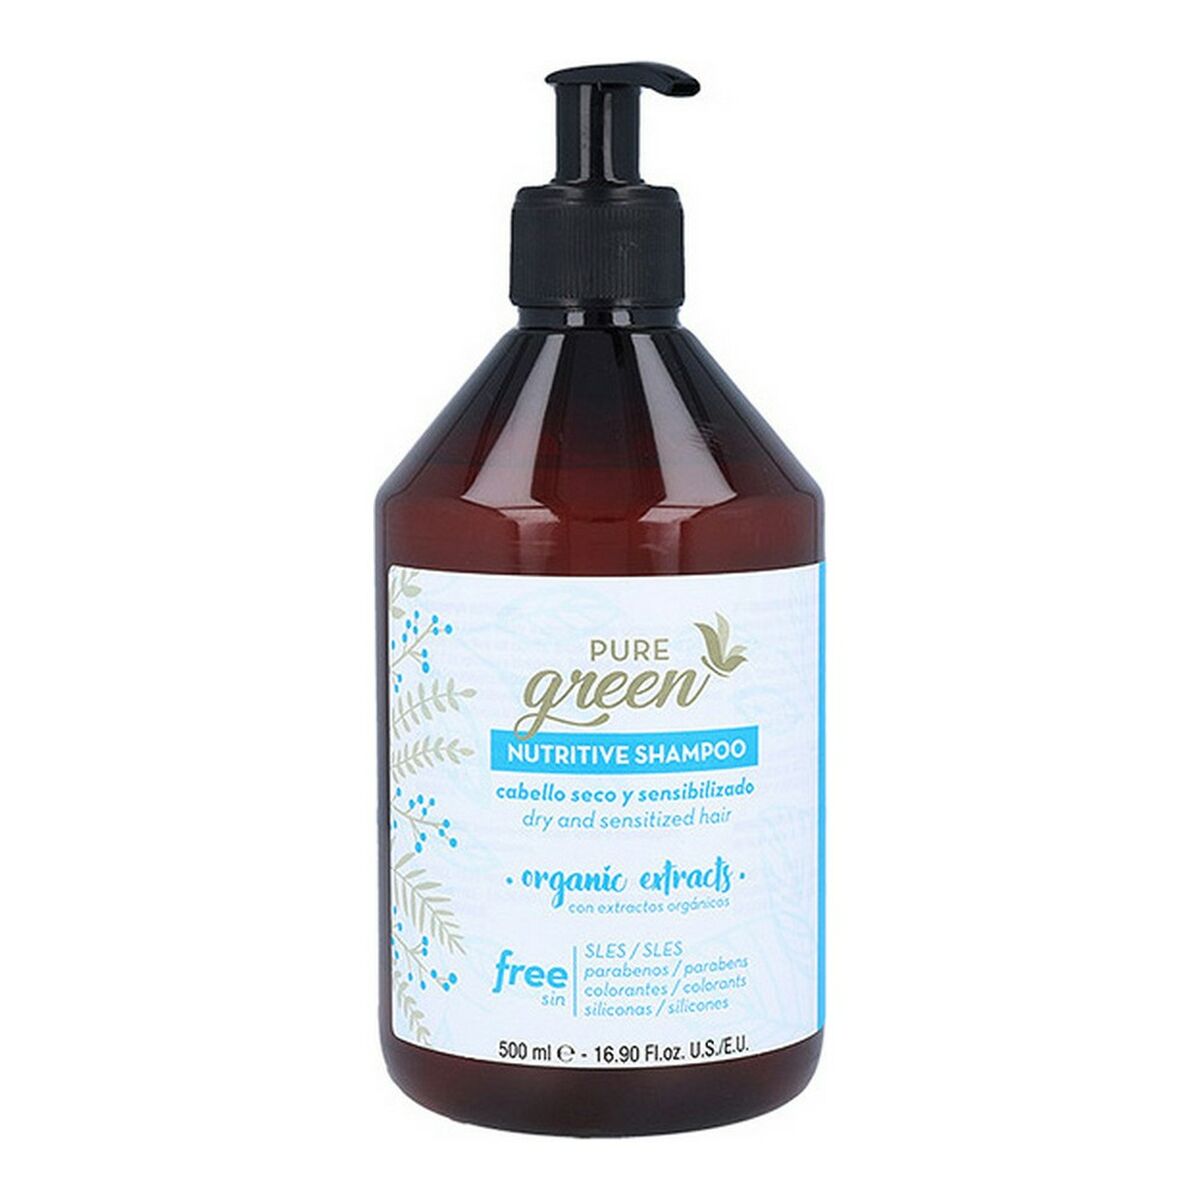 Șampon Nutritive Pure Green - Capacitate 1000 ml